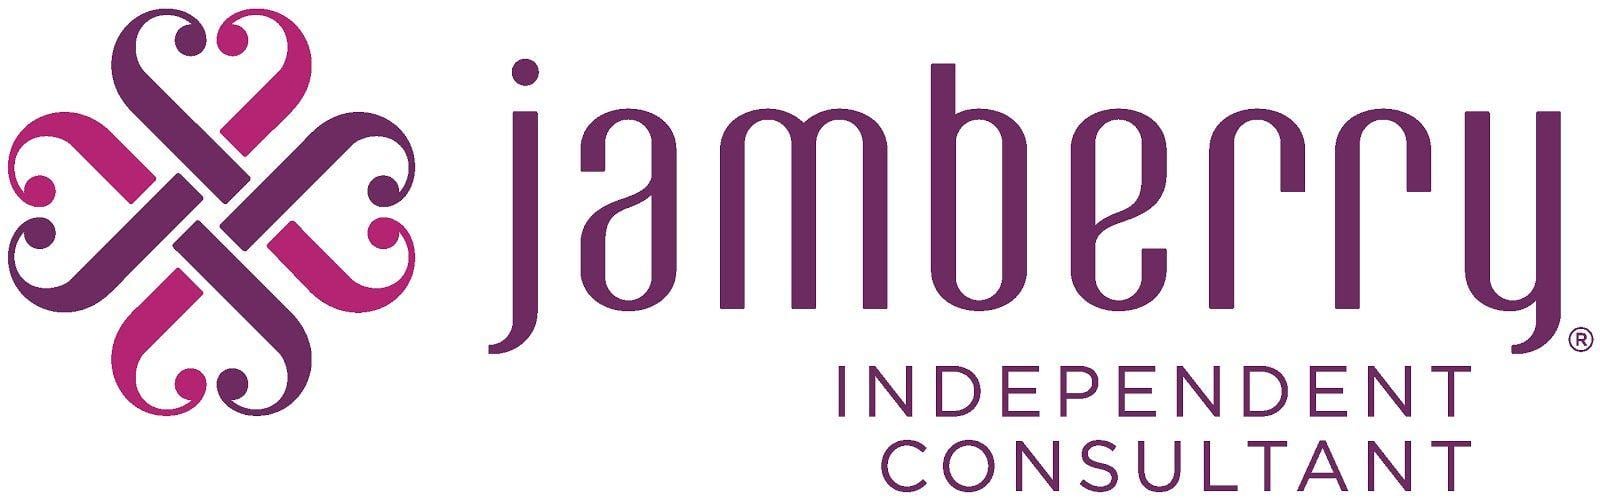 Jamberry Independent Consultant Logo - Jamberry Logos